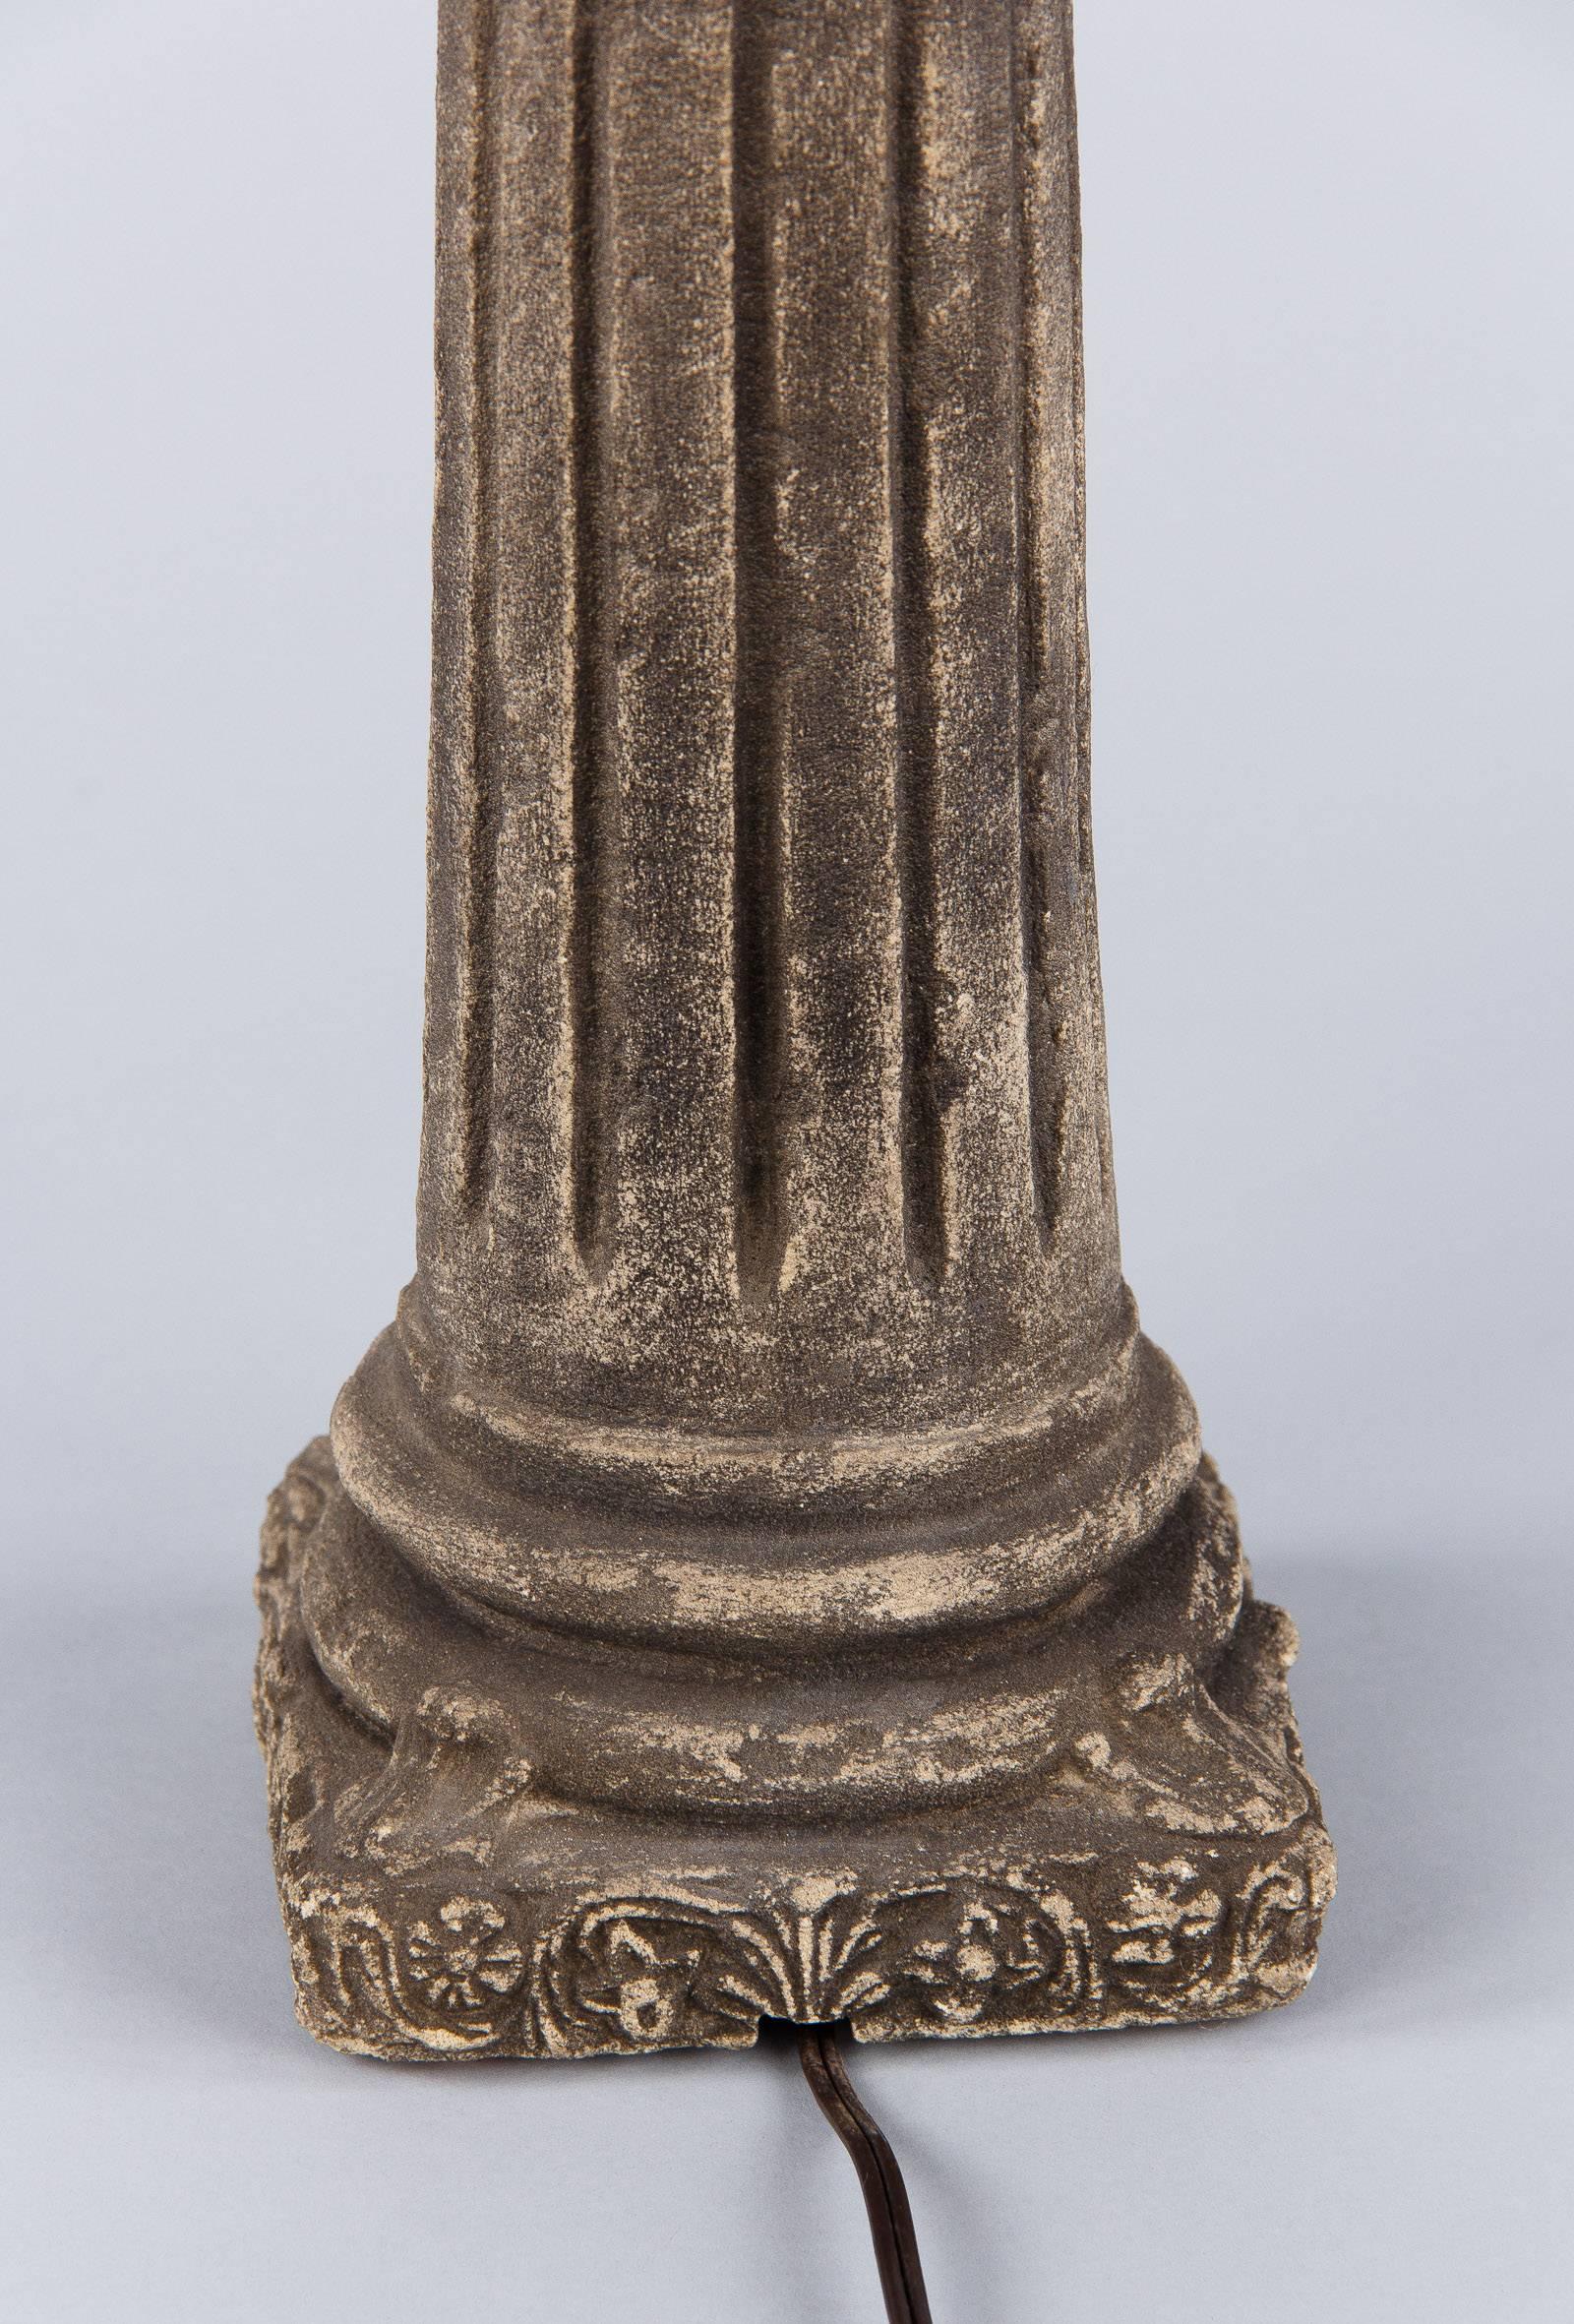 French Corinthian Column Stone Lamp, 20th Century For Sale 3